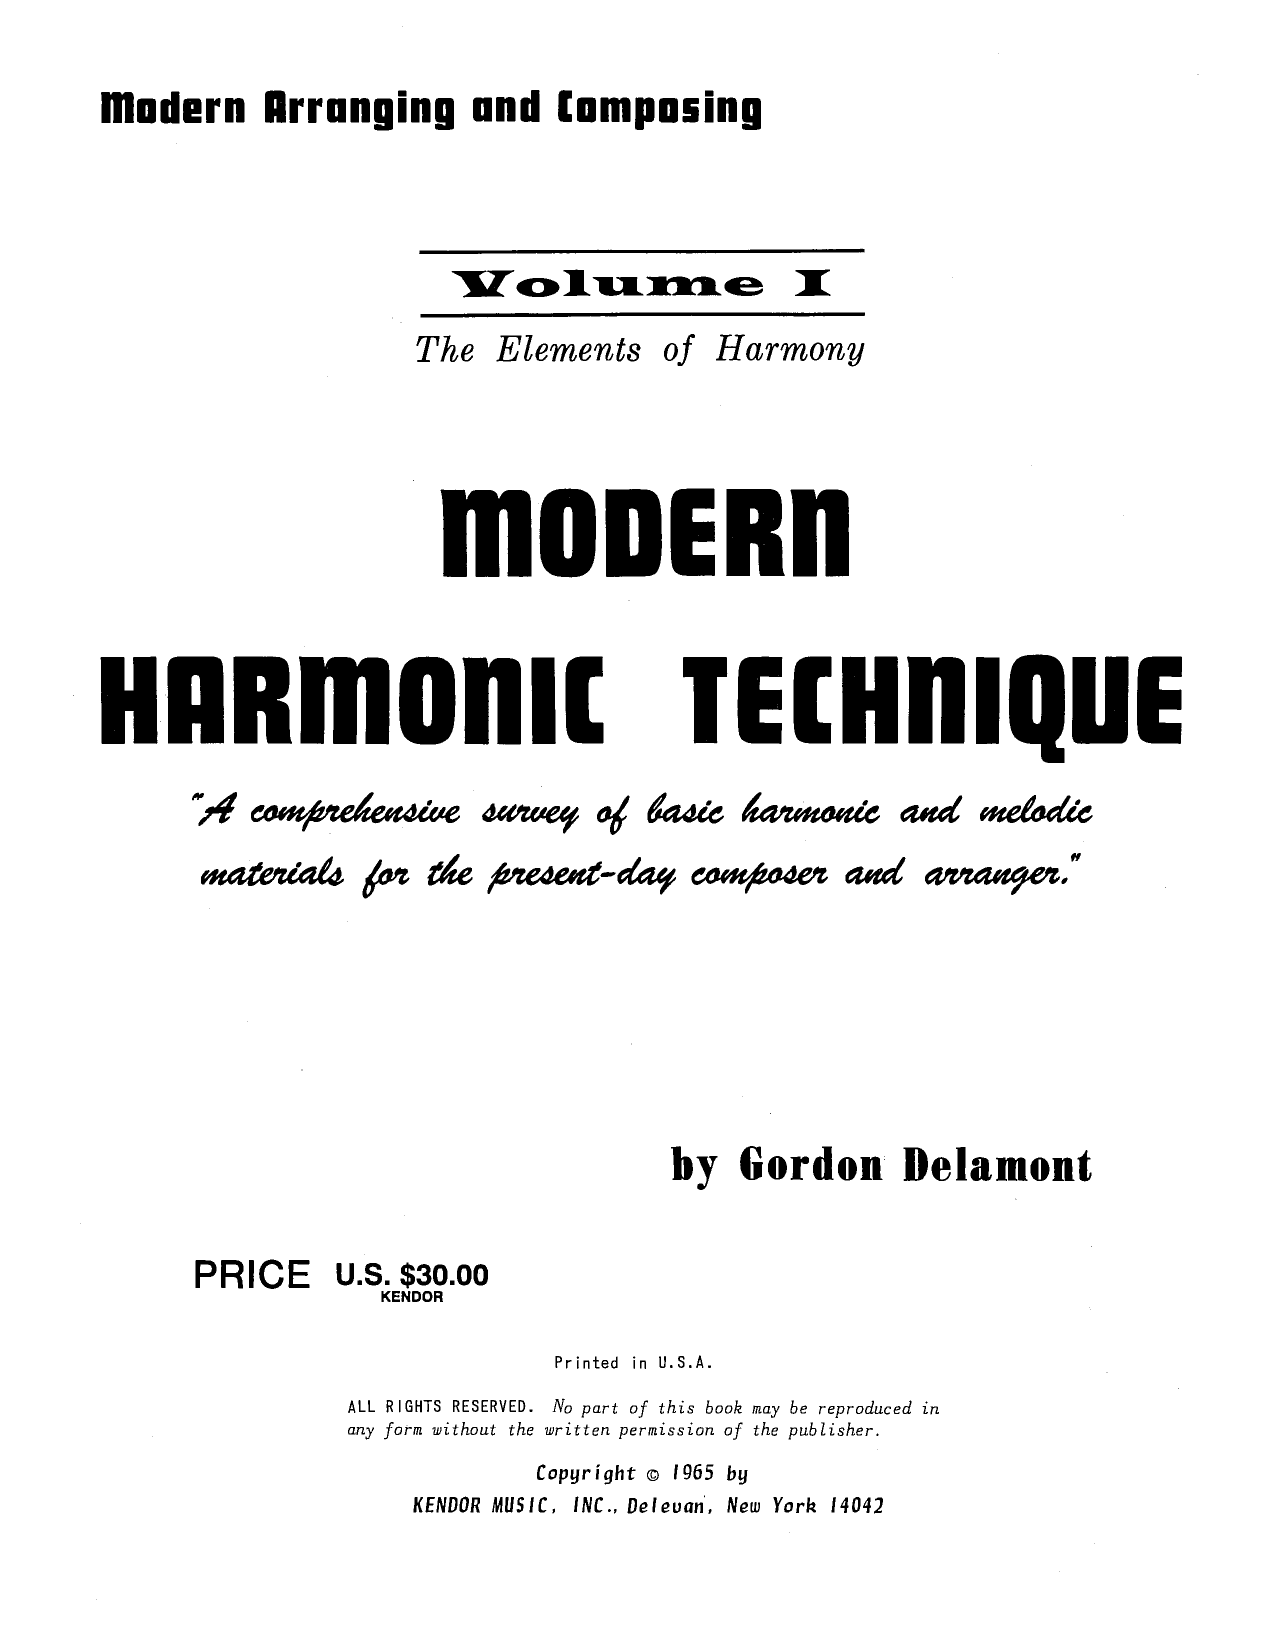 Download Gordon Delamont Modern Harmonic Technique, Vol. 1 Sheet Music